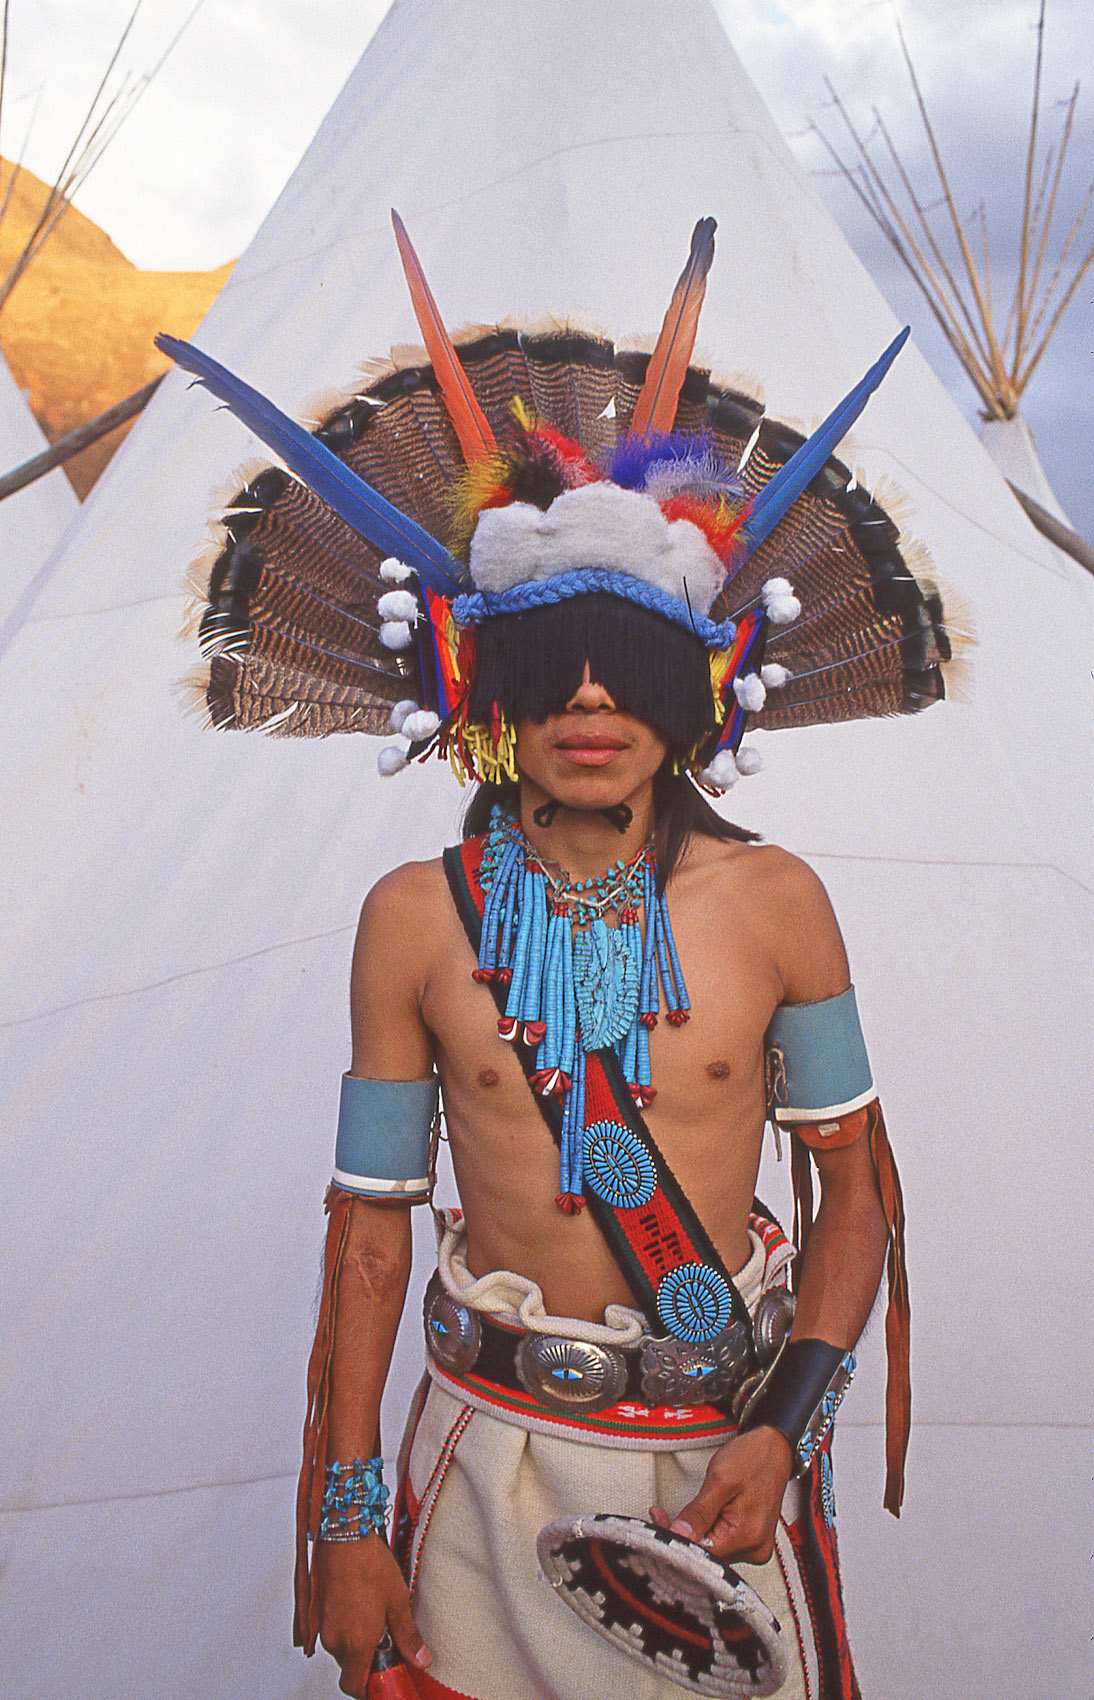 Zuni Traditional Dancer, John Annerino, Zuni Pueblo, Shiwinna, New Mexico, Native American dance